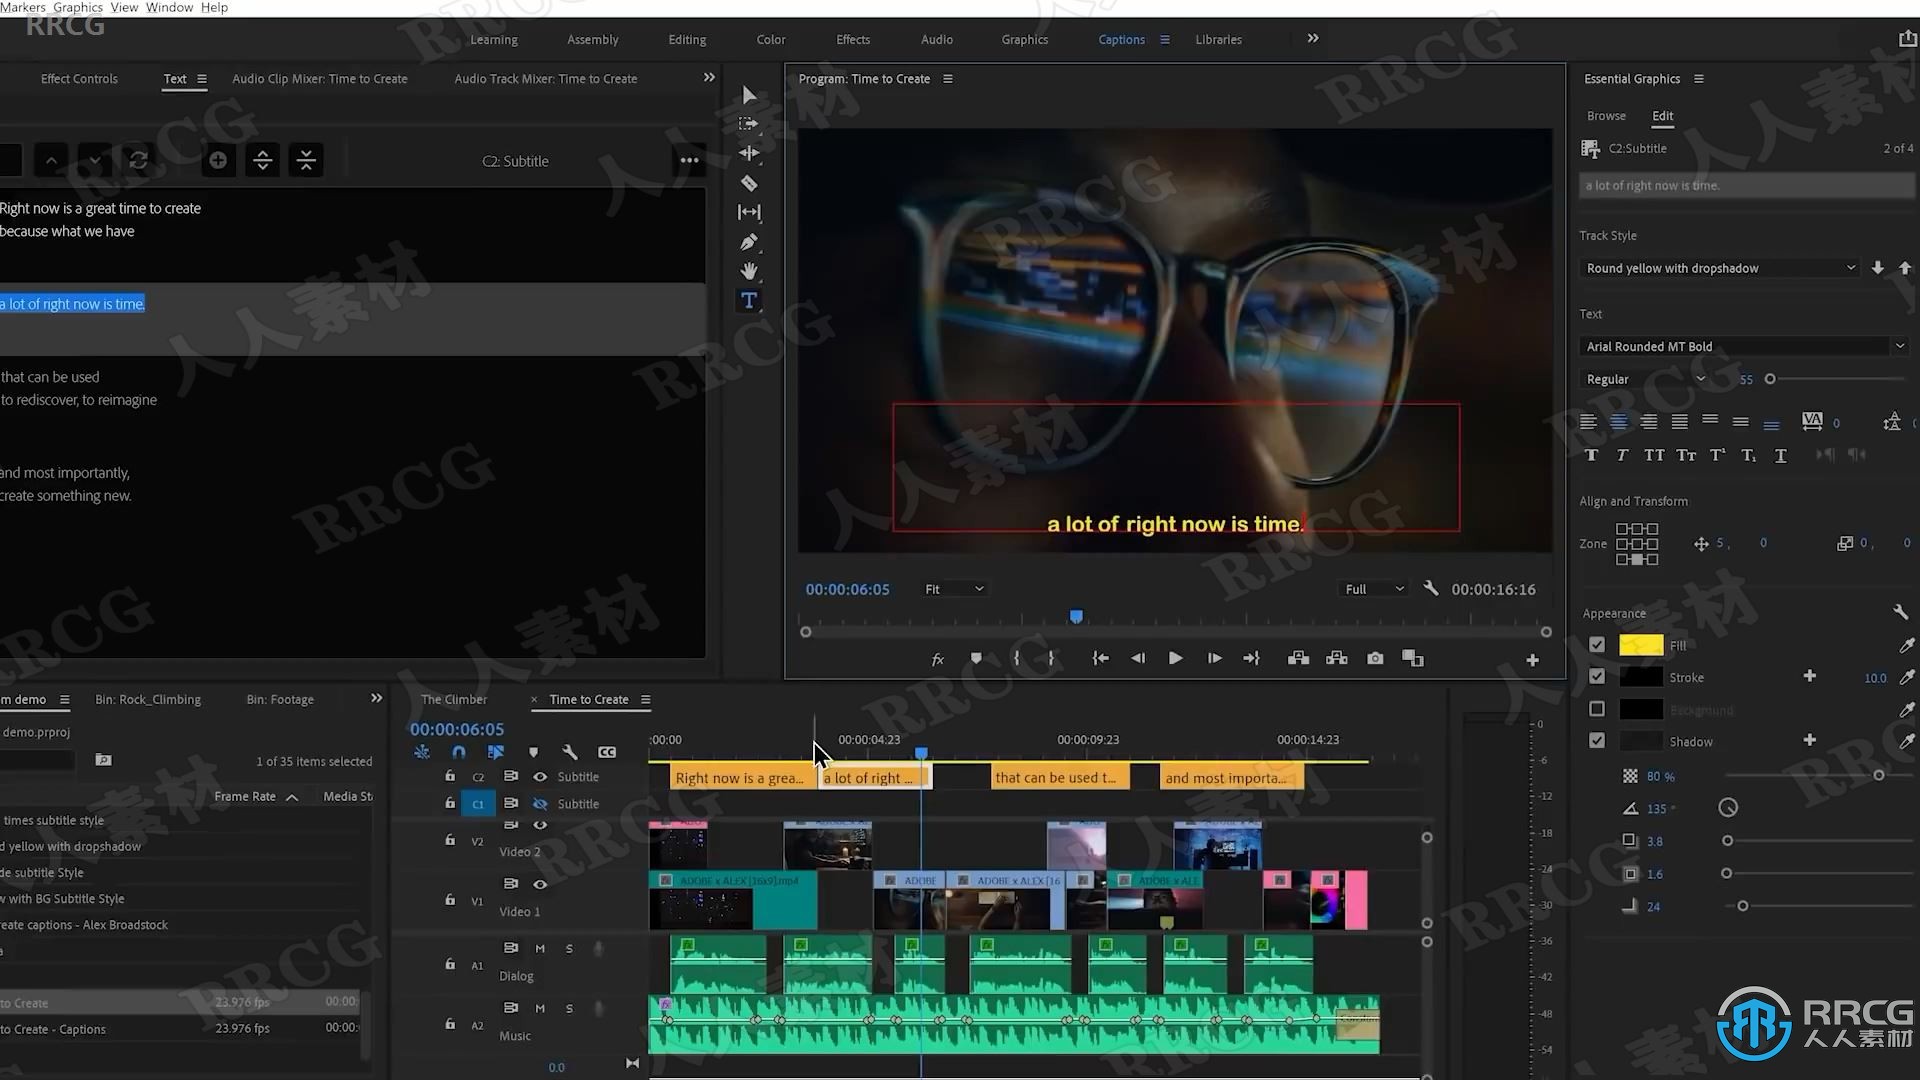 Adobe Speech to Text 2023视频对话自动添加字幕Premiere Pro插件V10.0版